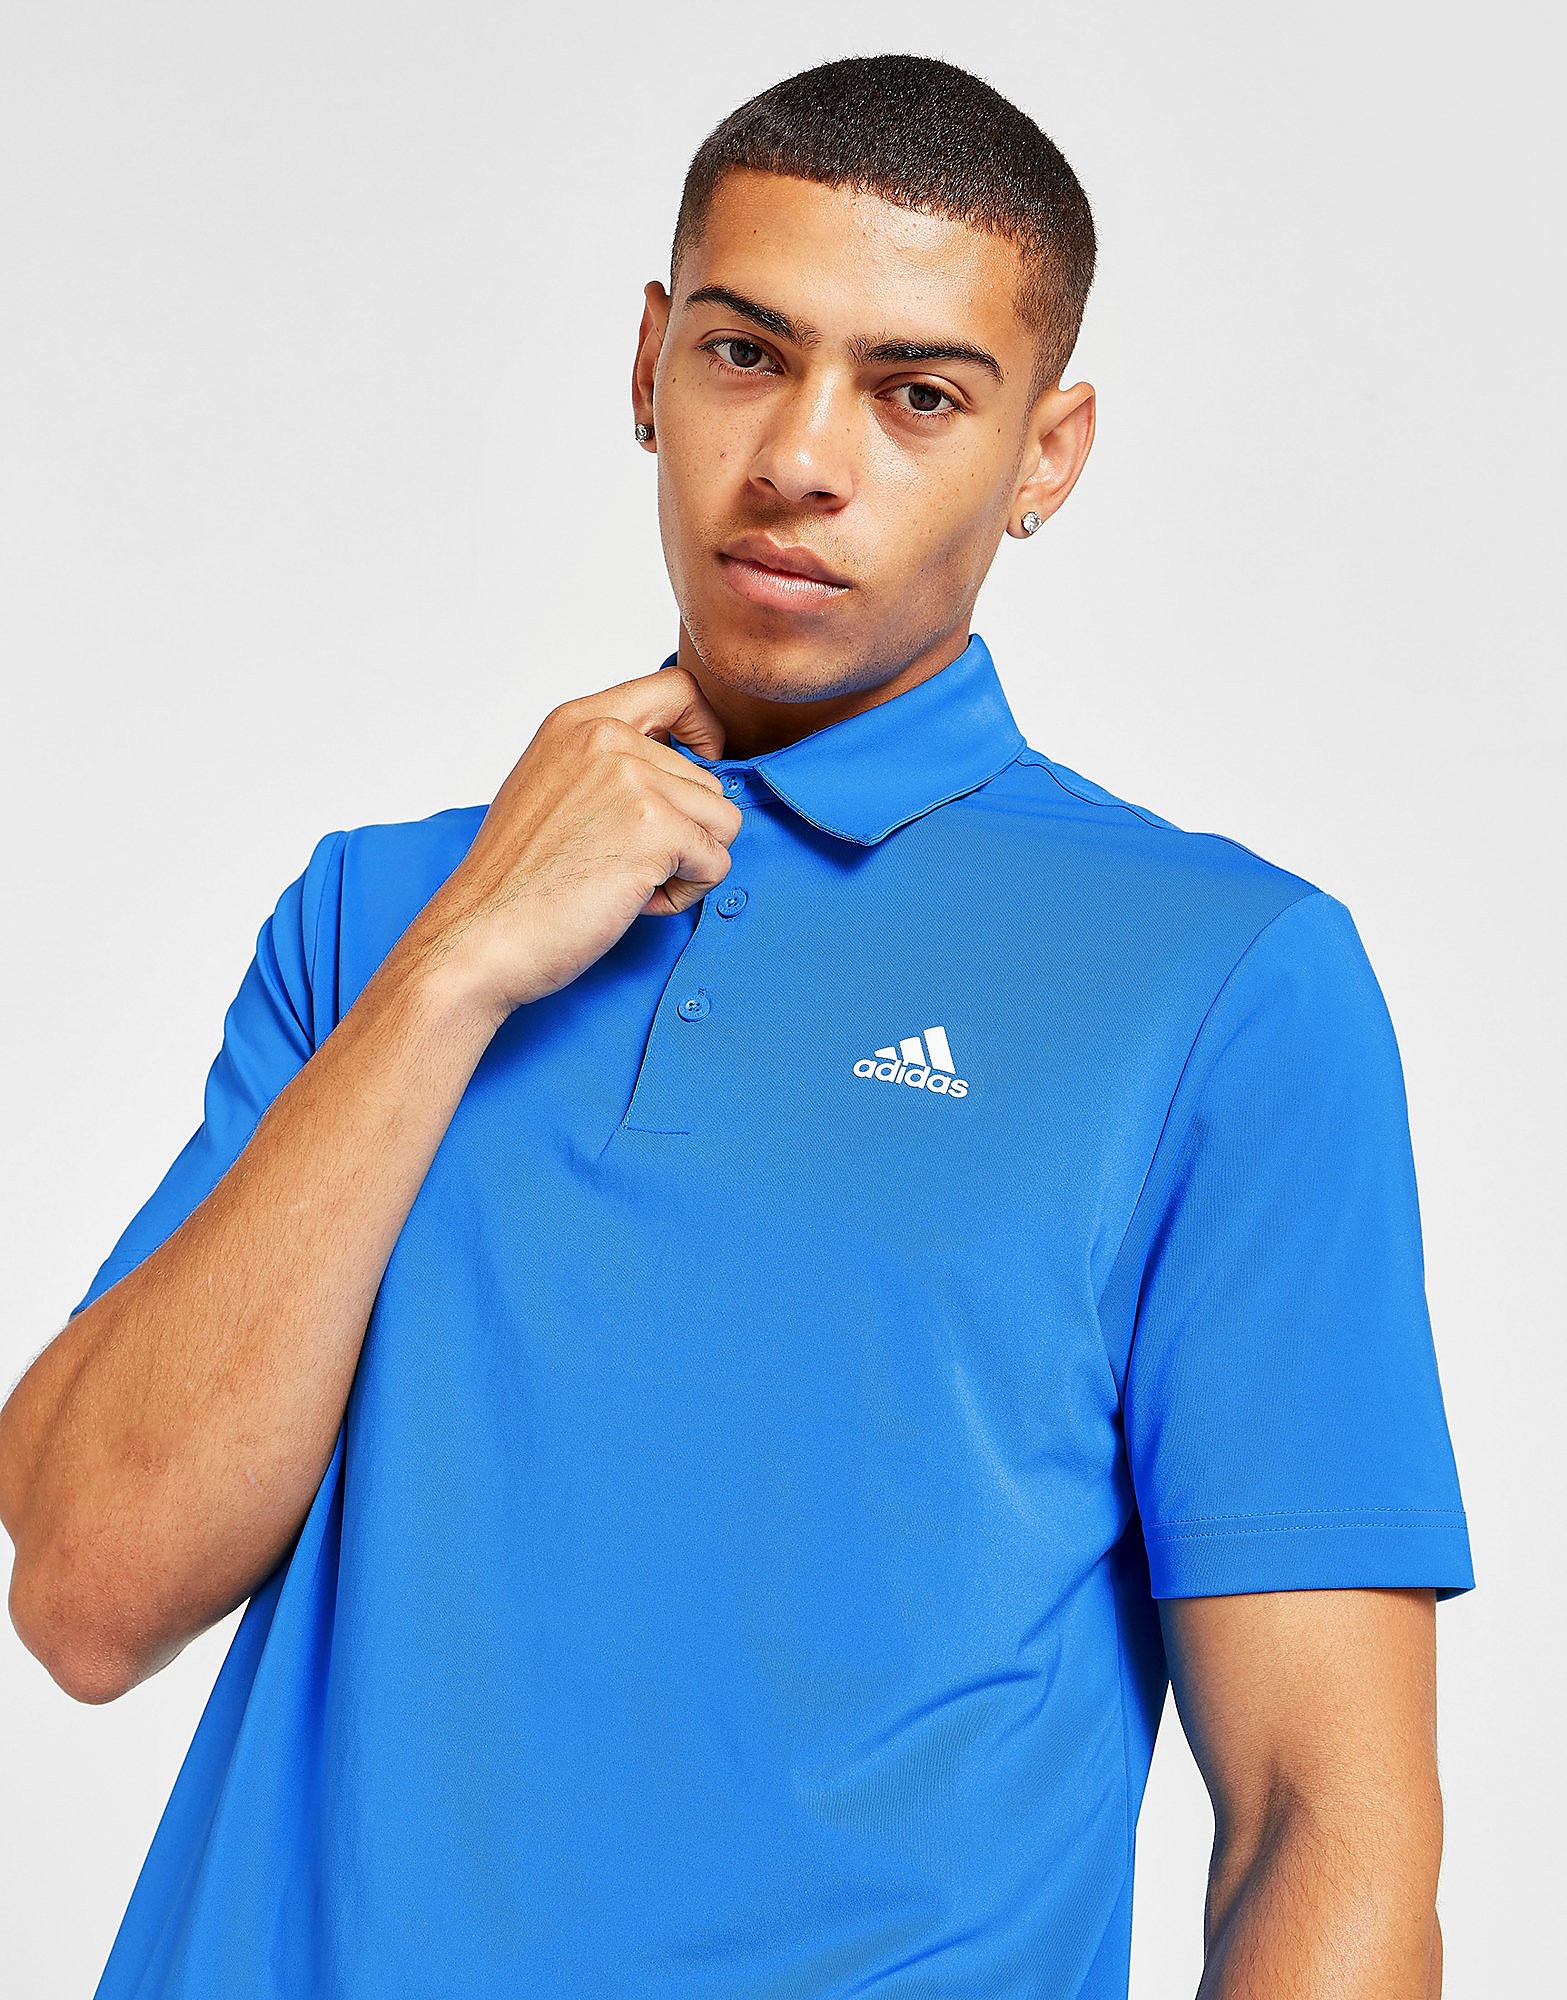 adidas Polo Golf Prime Ultimate365 - Azul - Mens, Azul